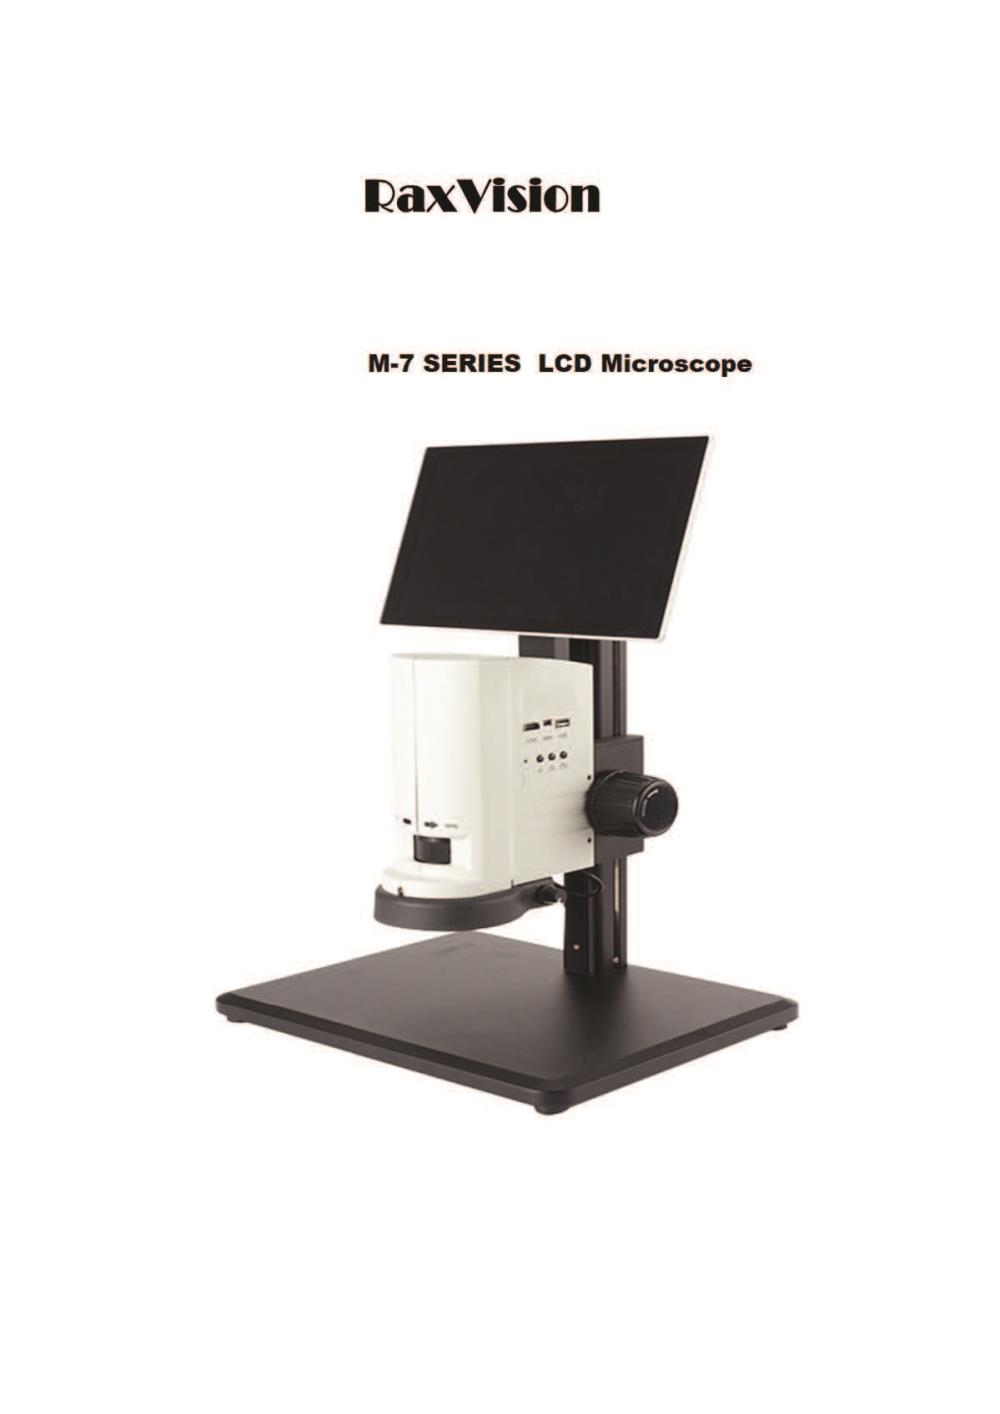 LCD Microscope,กล้องจุลทรรศน์ ,RaxVision,Instruments and Controls/Microscopes